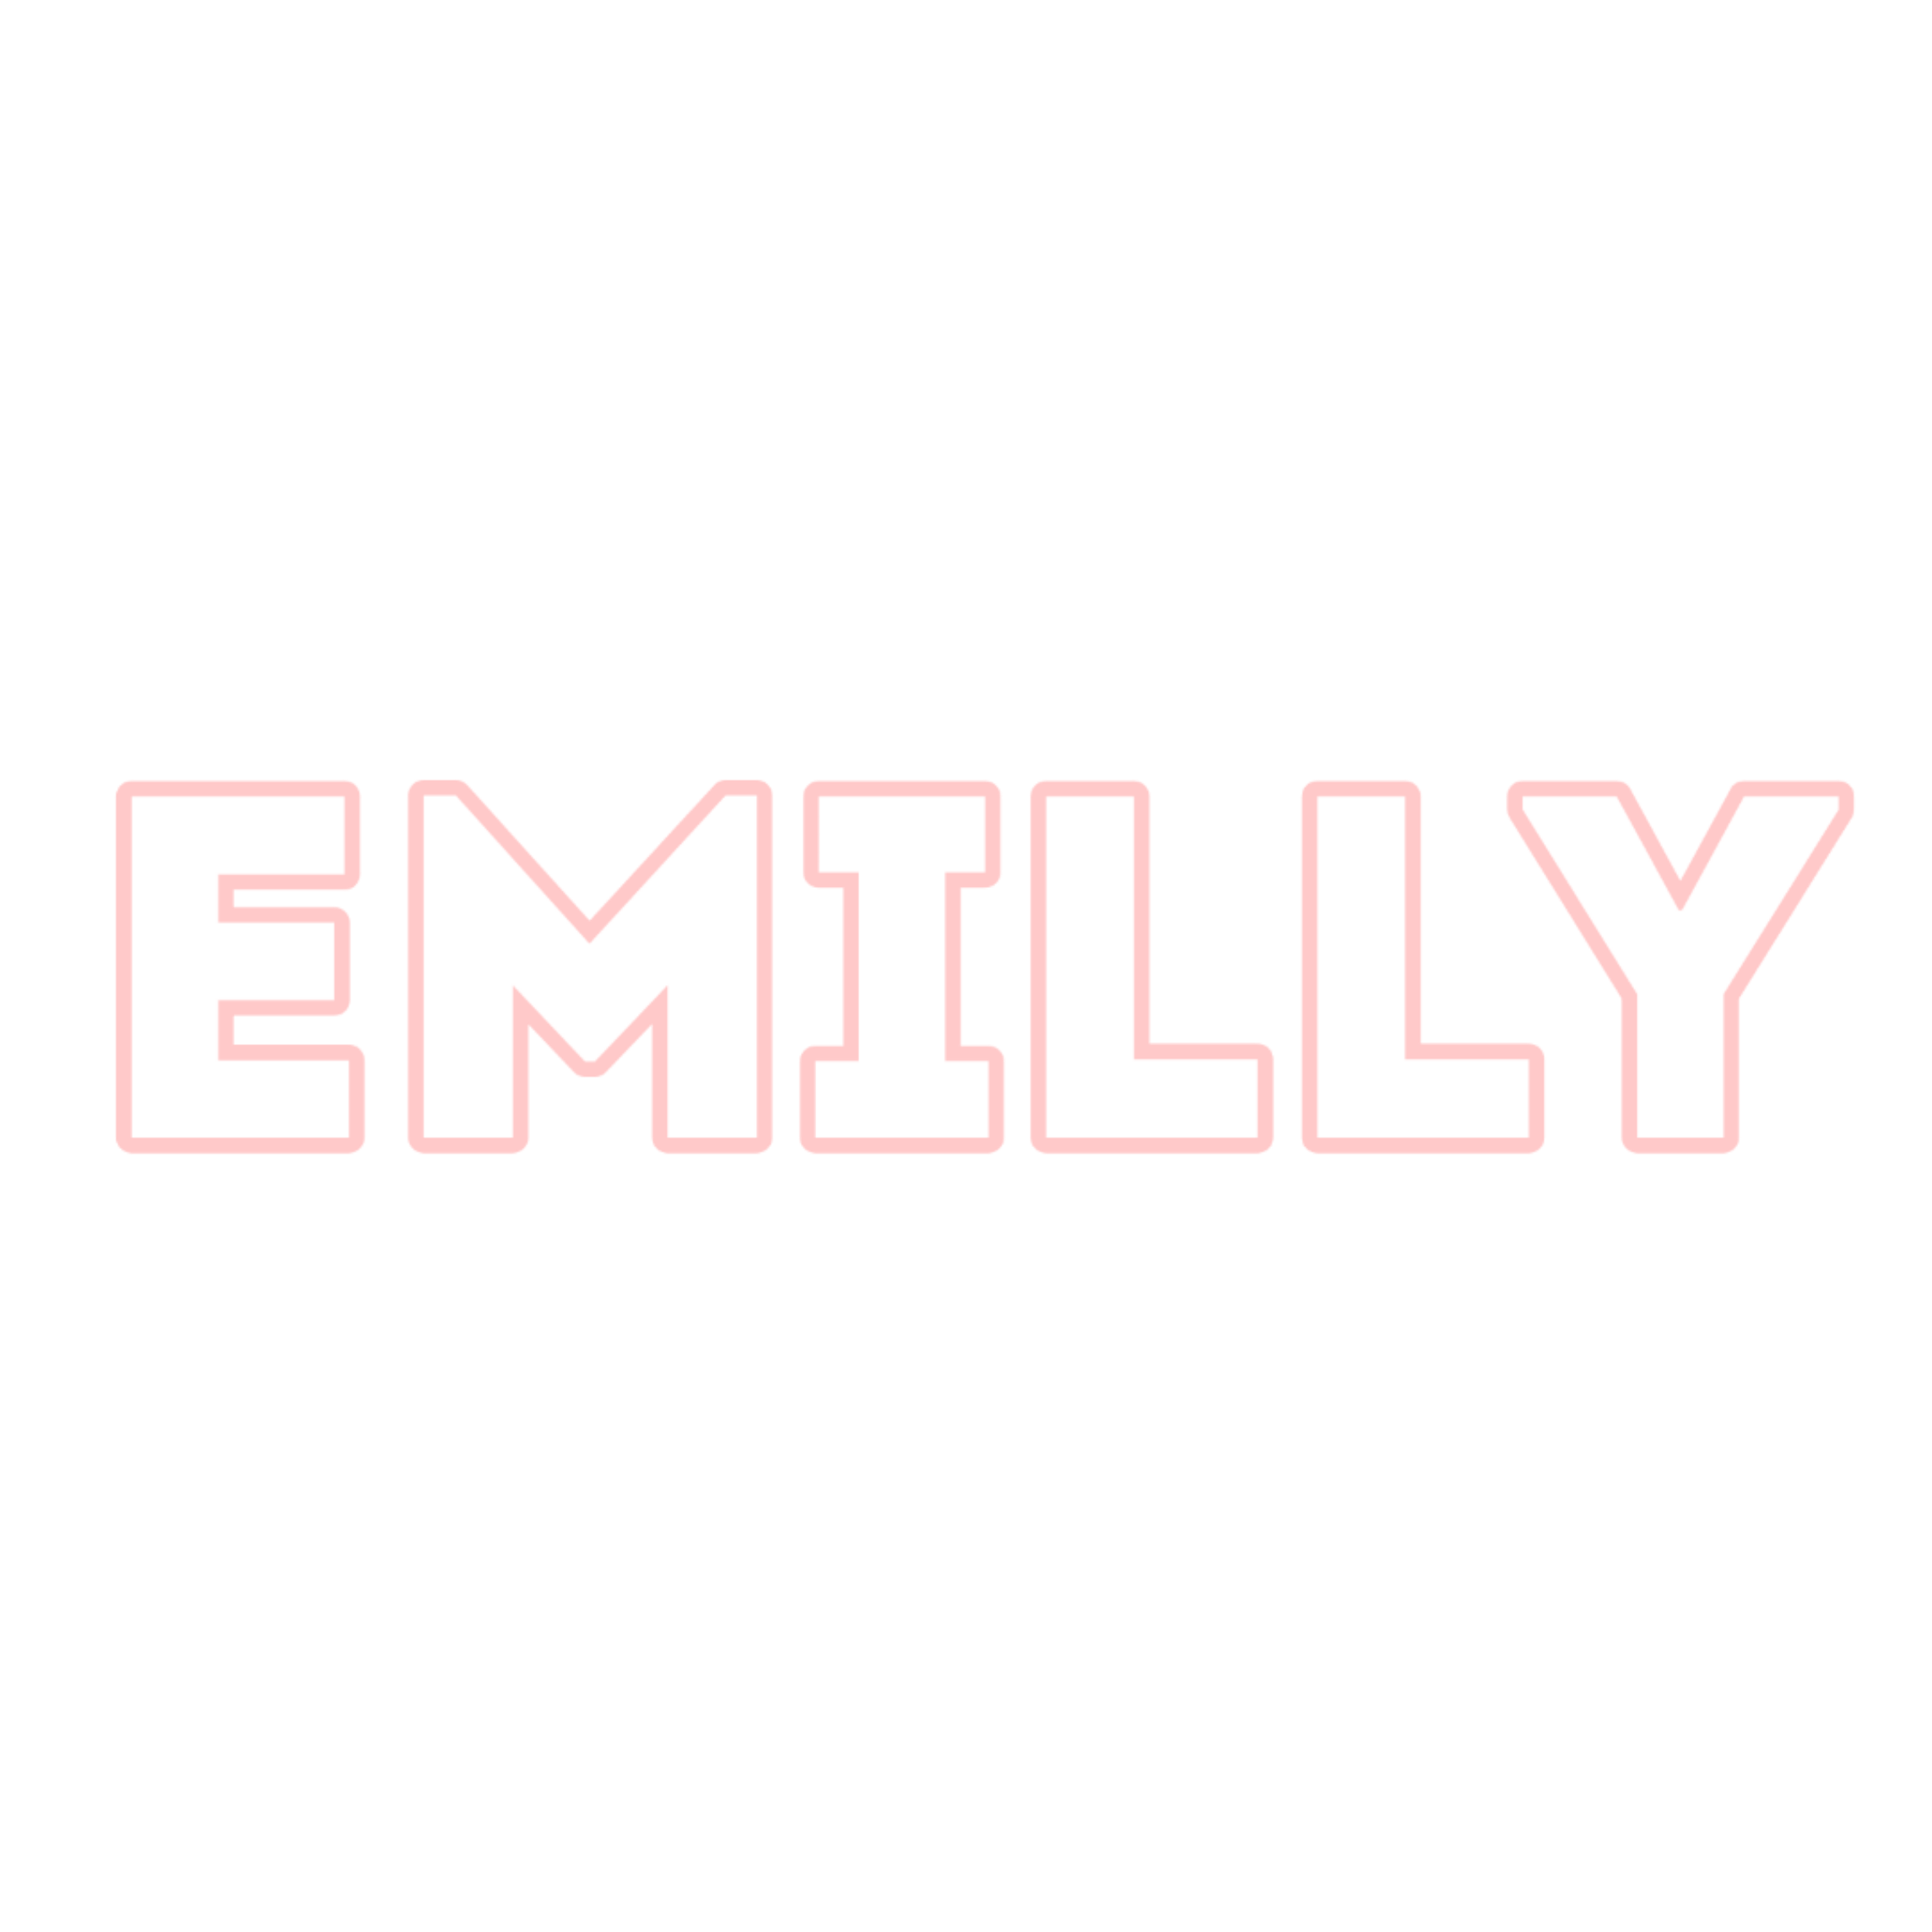 emilly freetoedit #emilly sticker by @-emiih-